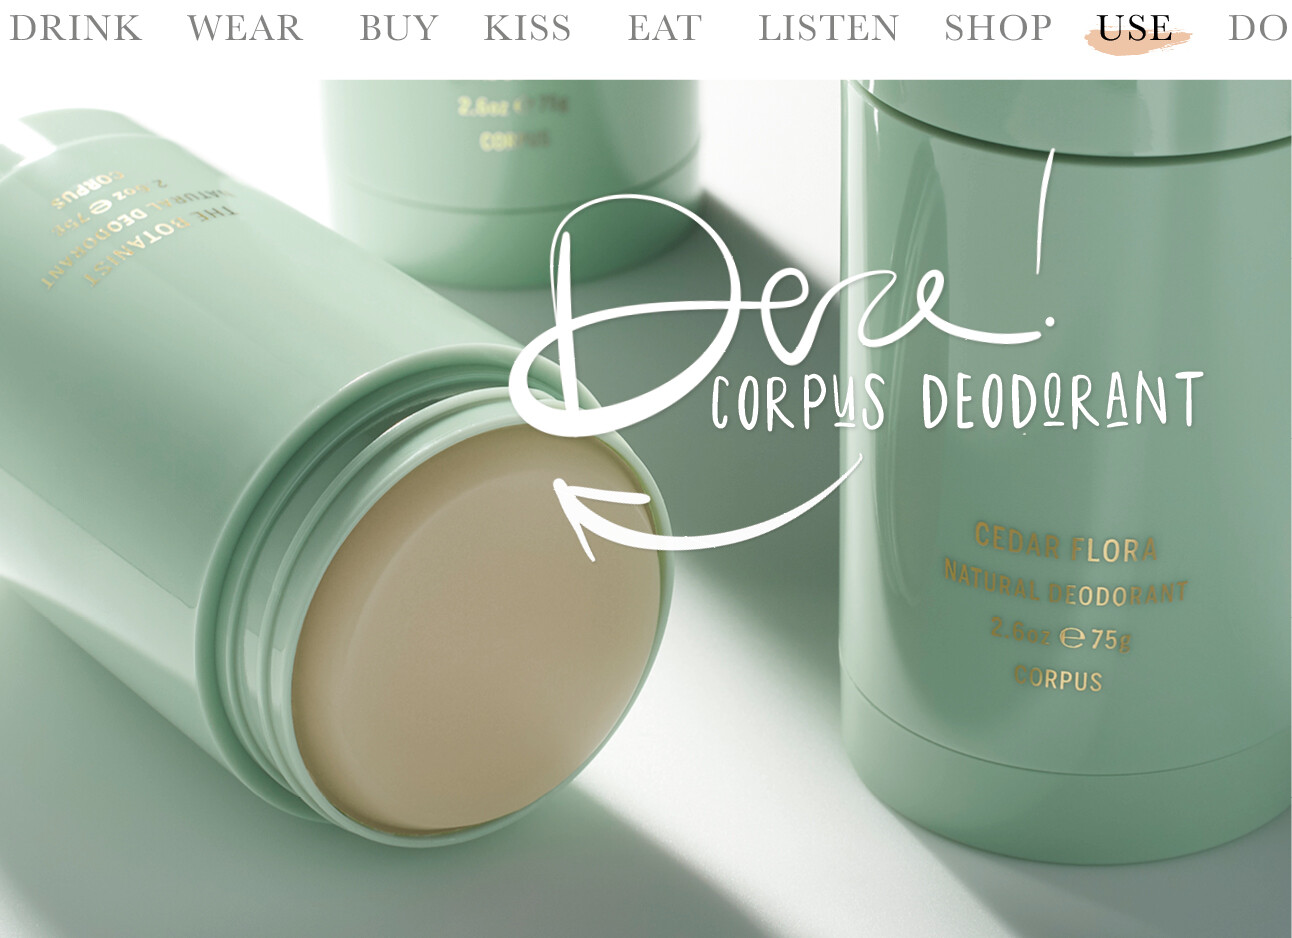 Corpus deodorant SKins cosmetics lotte today we